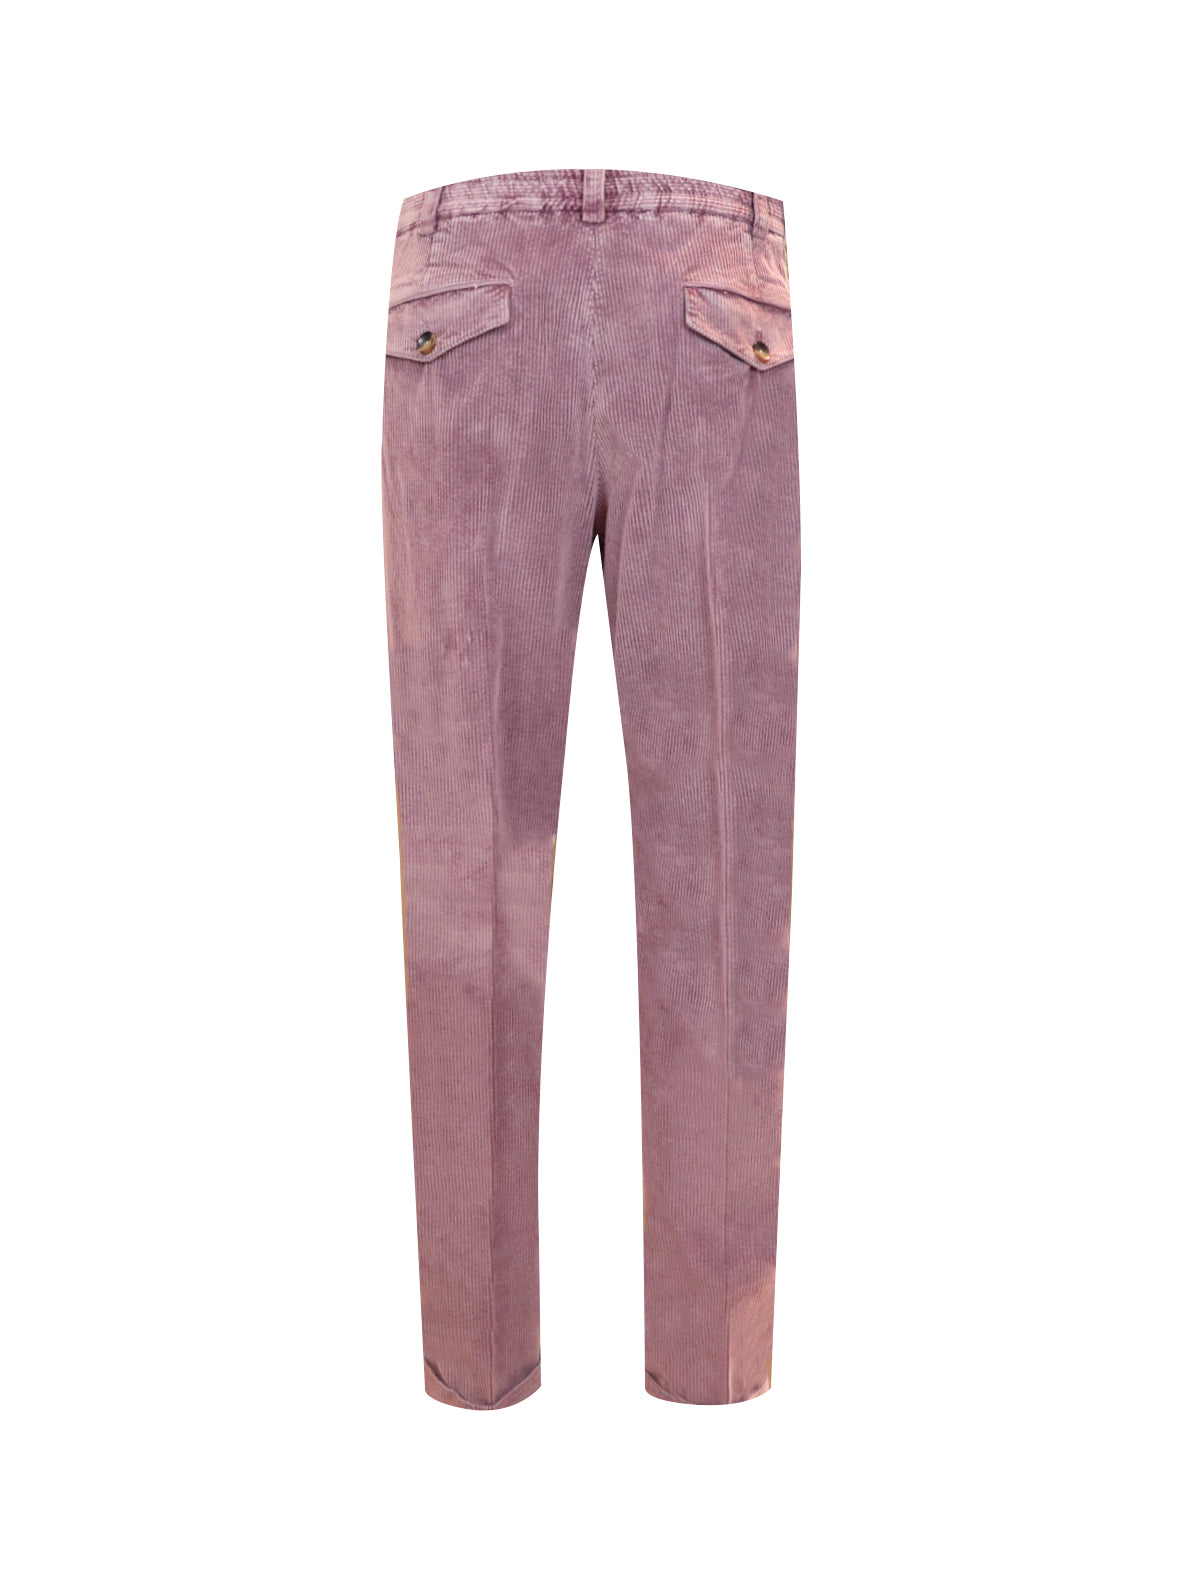 PT TORINO The Rebel Cotton Corduroy Trouser in Purple